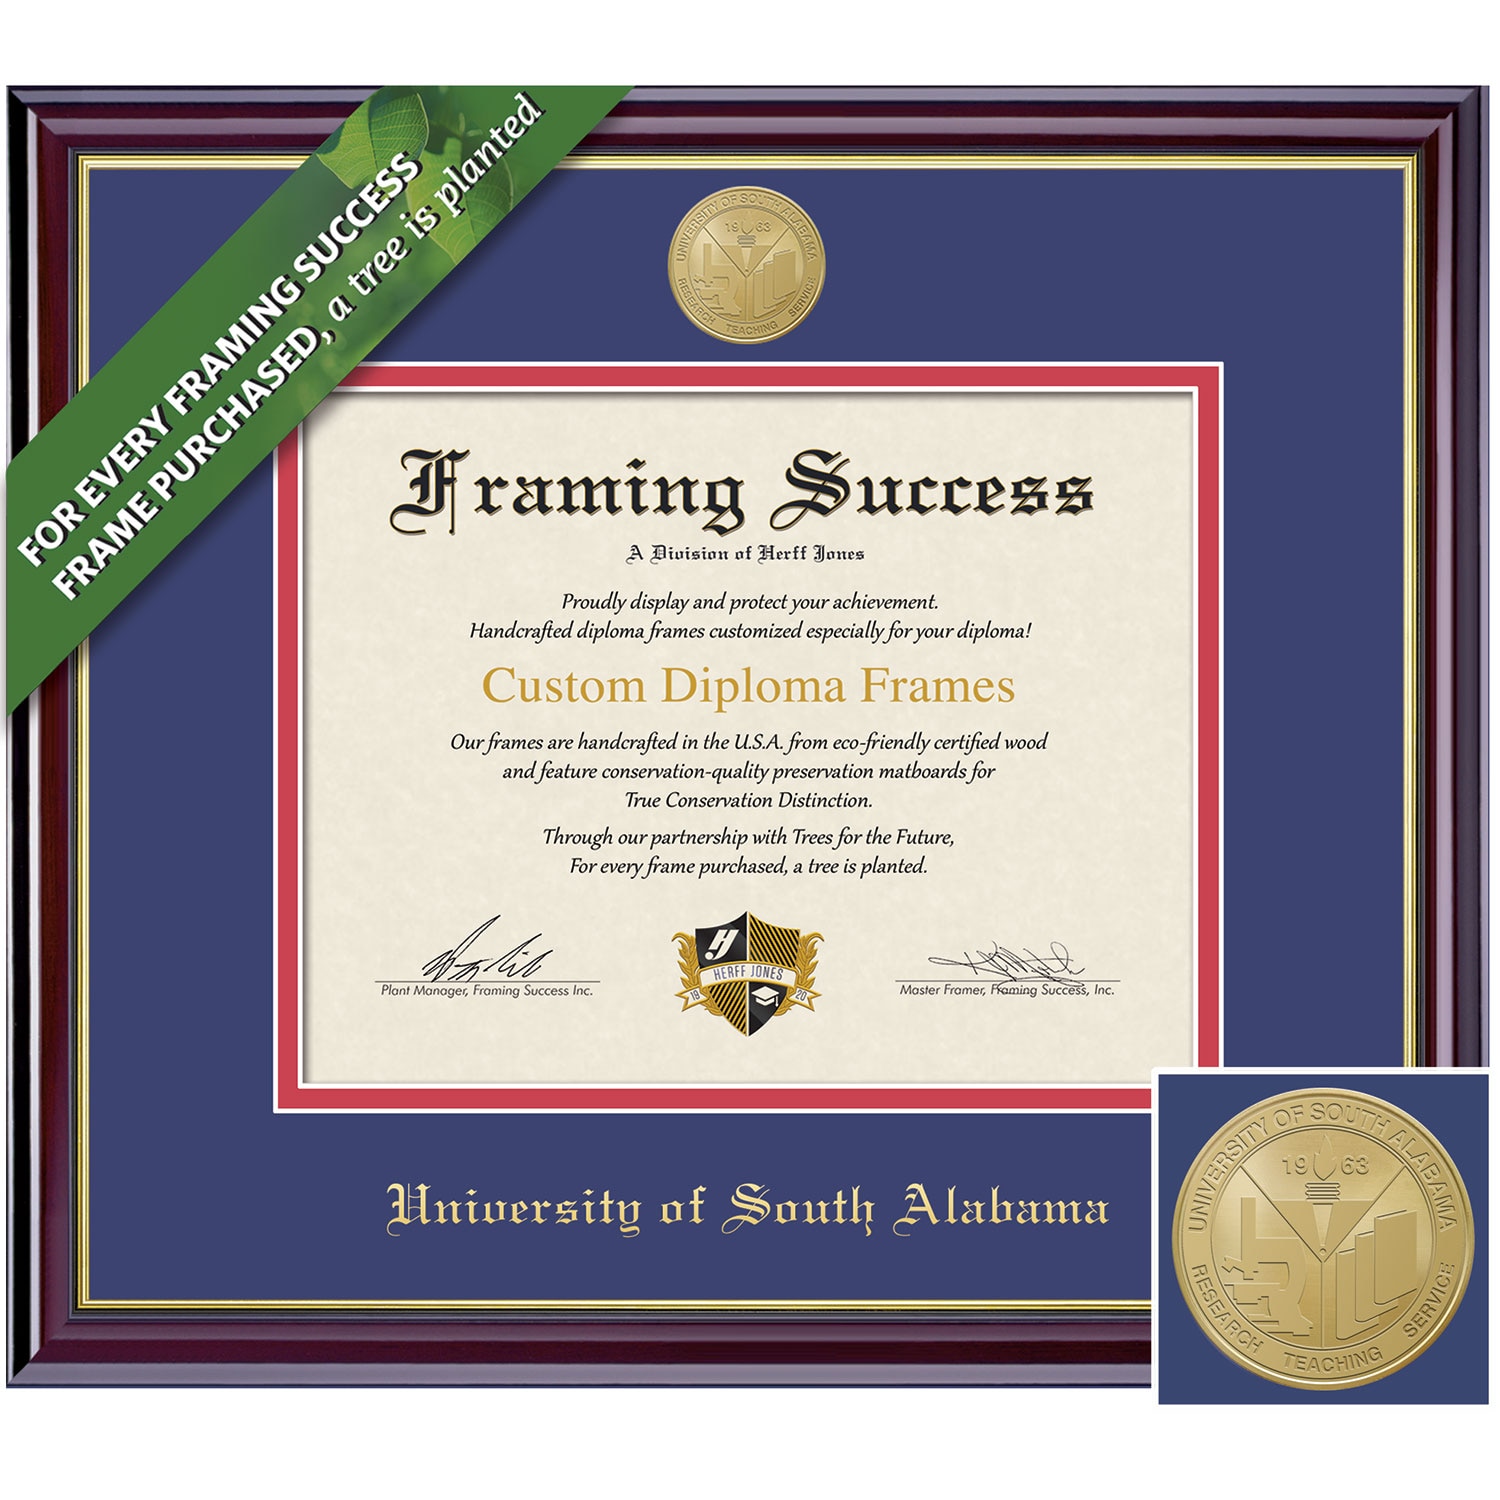 Framing Success 12 x 15 Gold Medallion PhD Windsor Diploma Frame